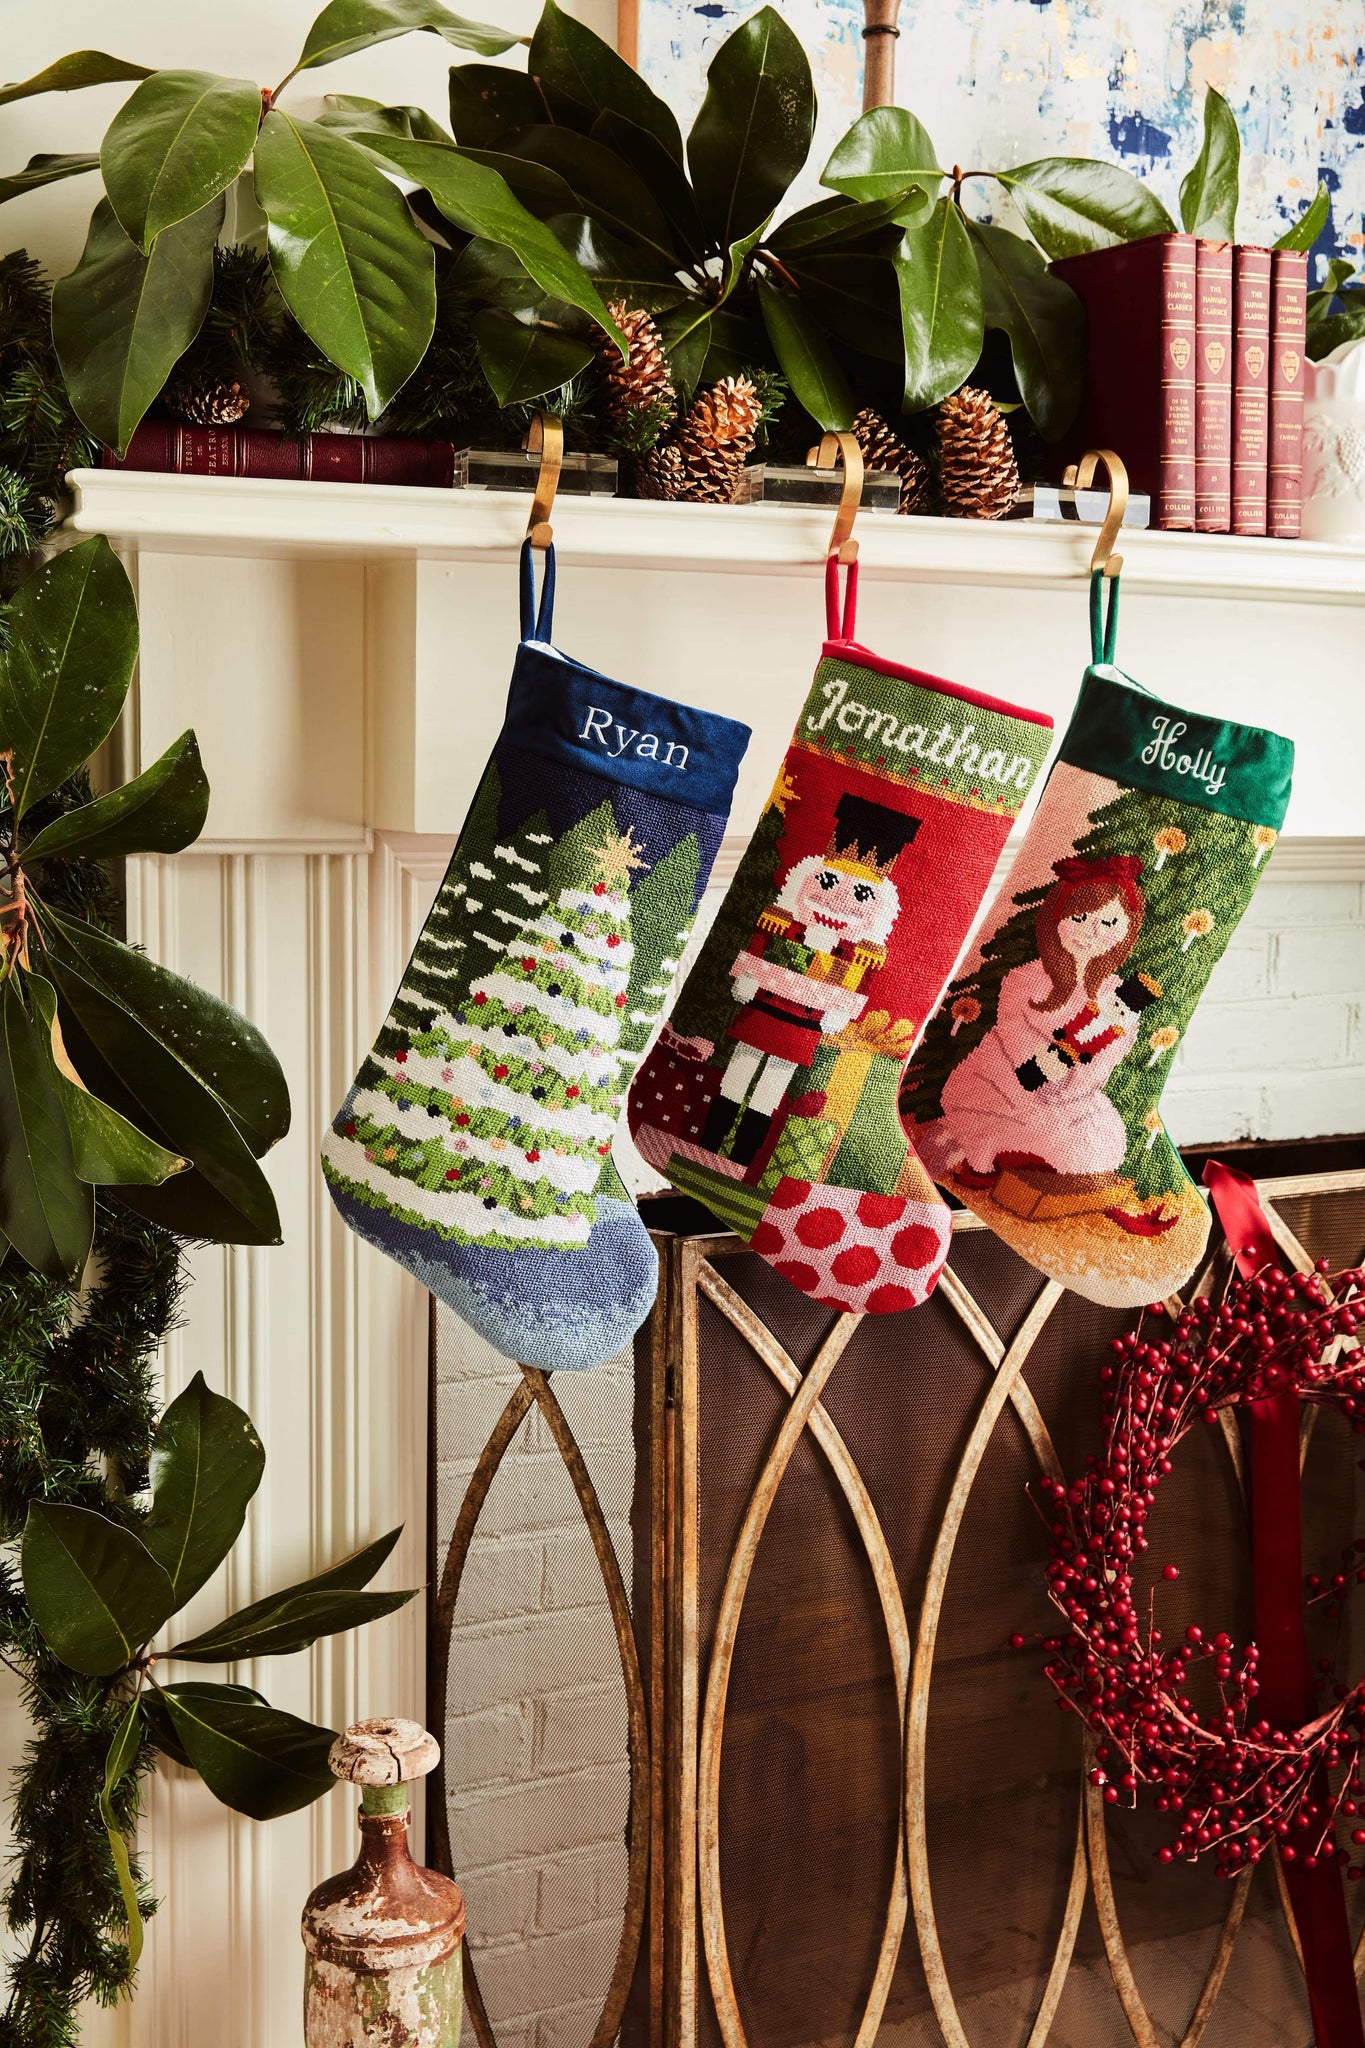 Personalized Needlepoint Christmas Stockings - Nutcracker